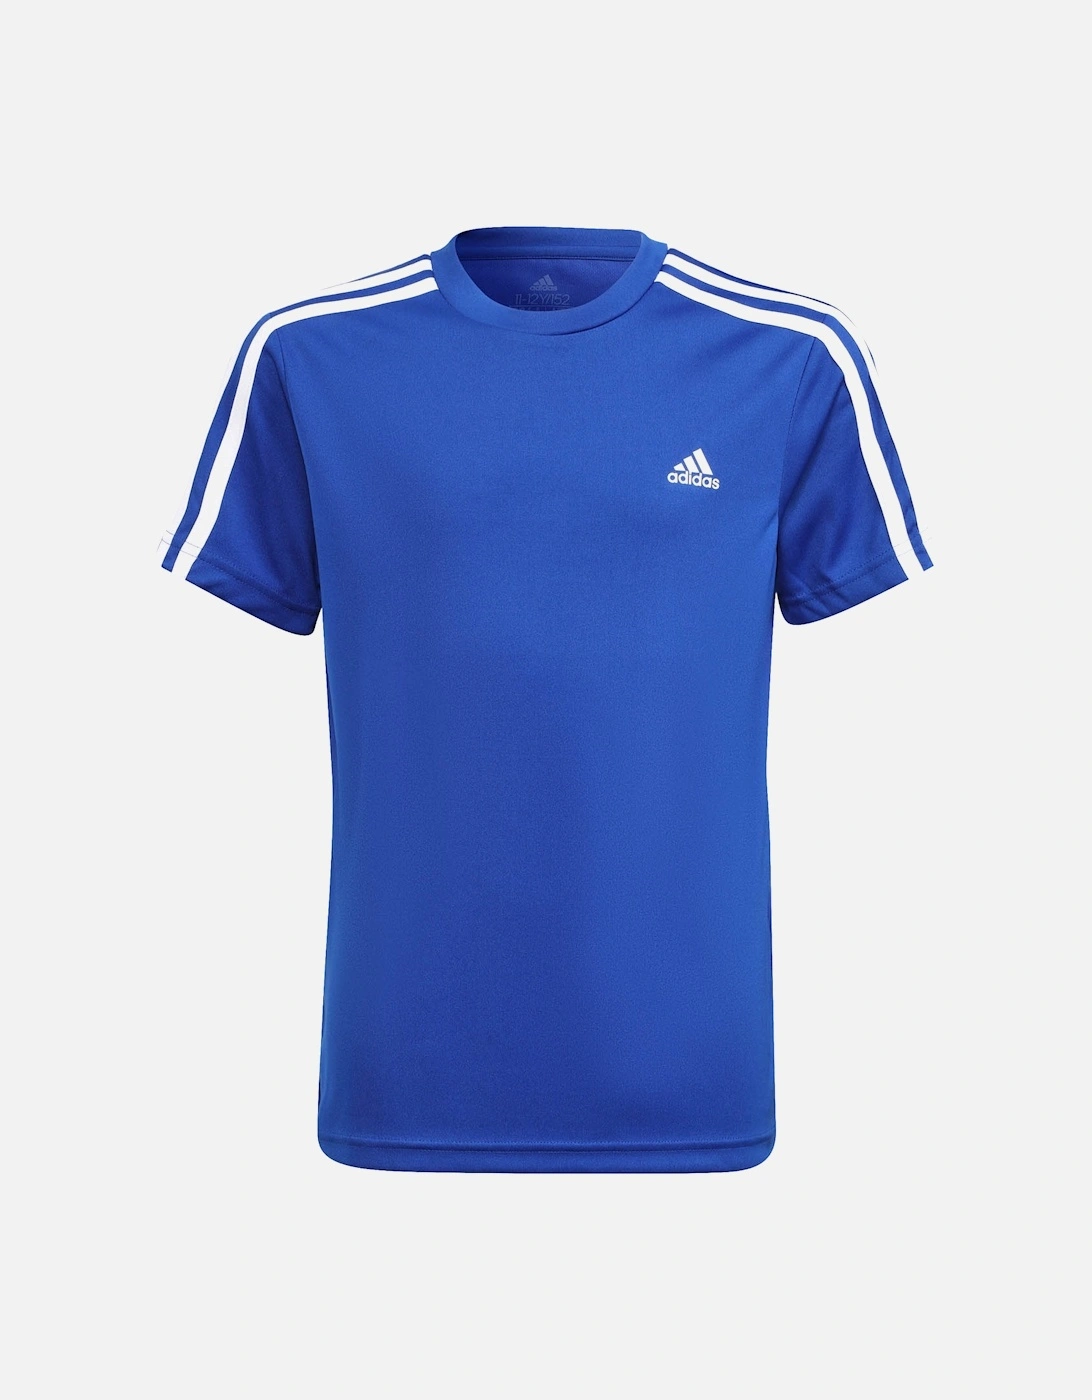 Juniors 3 Stripe T-Shirt And Short Set (Blue)